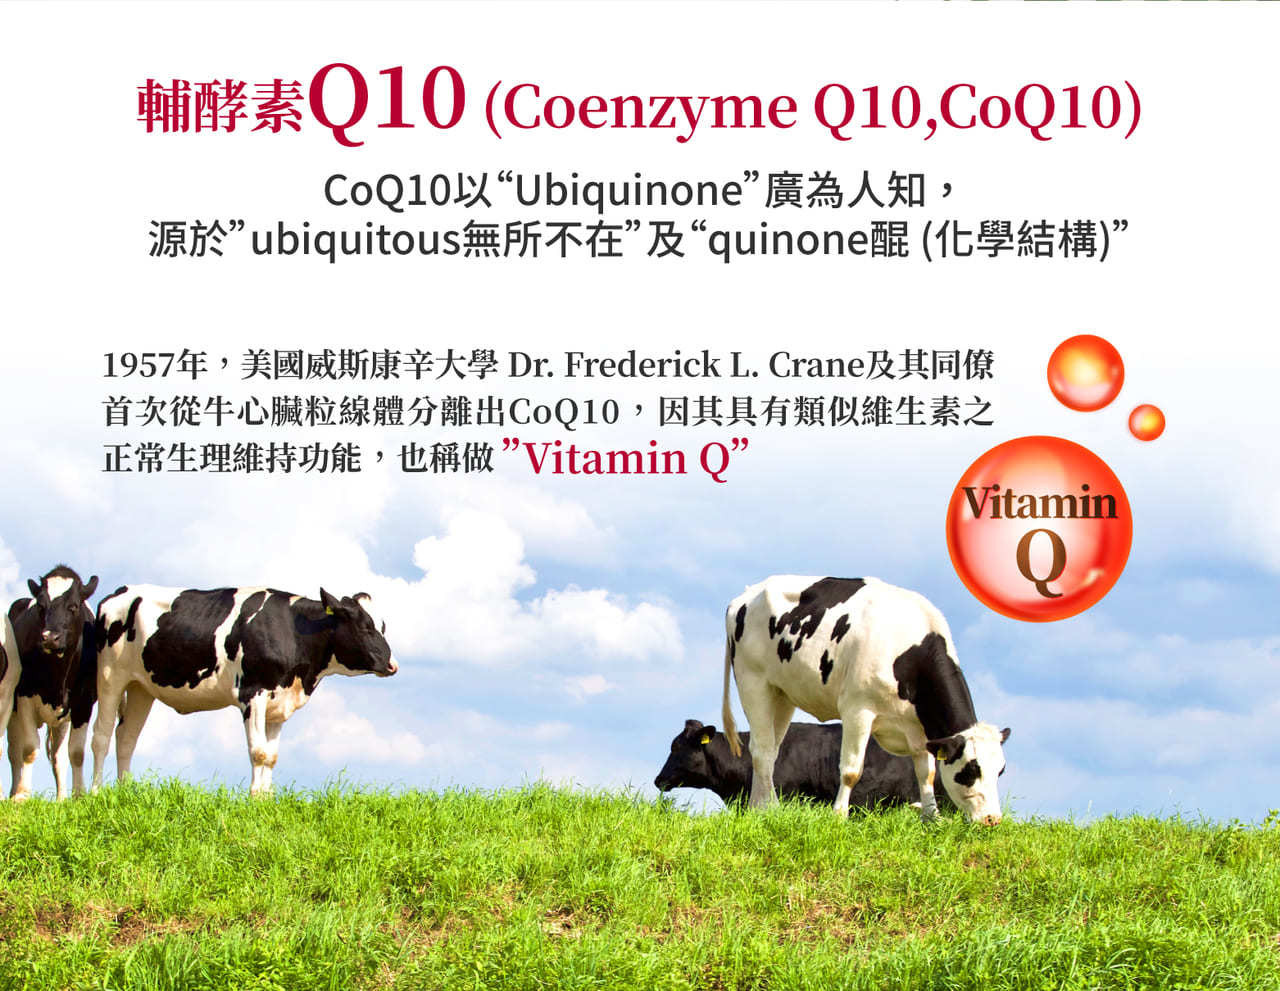 CoQ10中文名稱為輔酵素Q10，具有類似維生素之正常生理維持功能